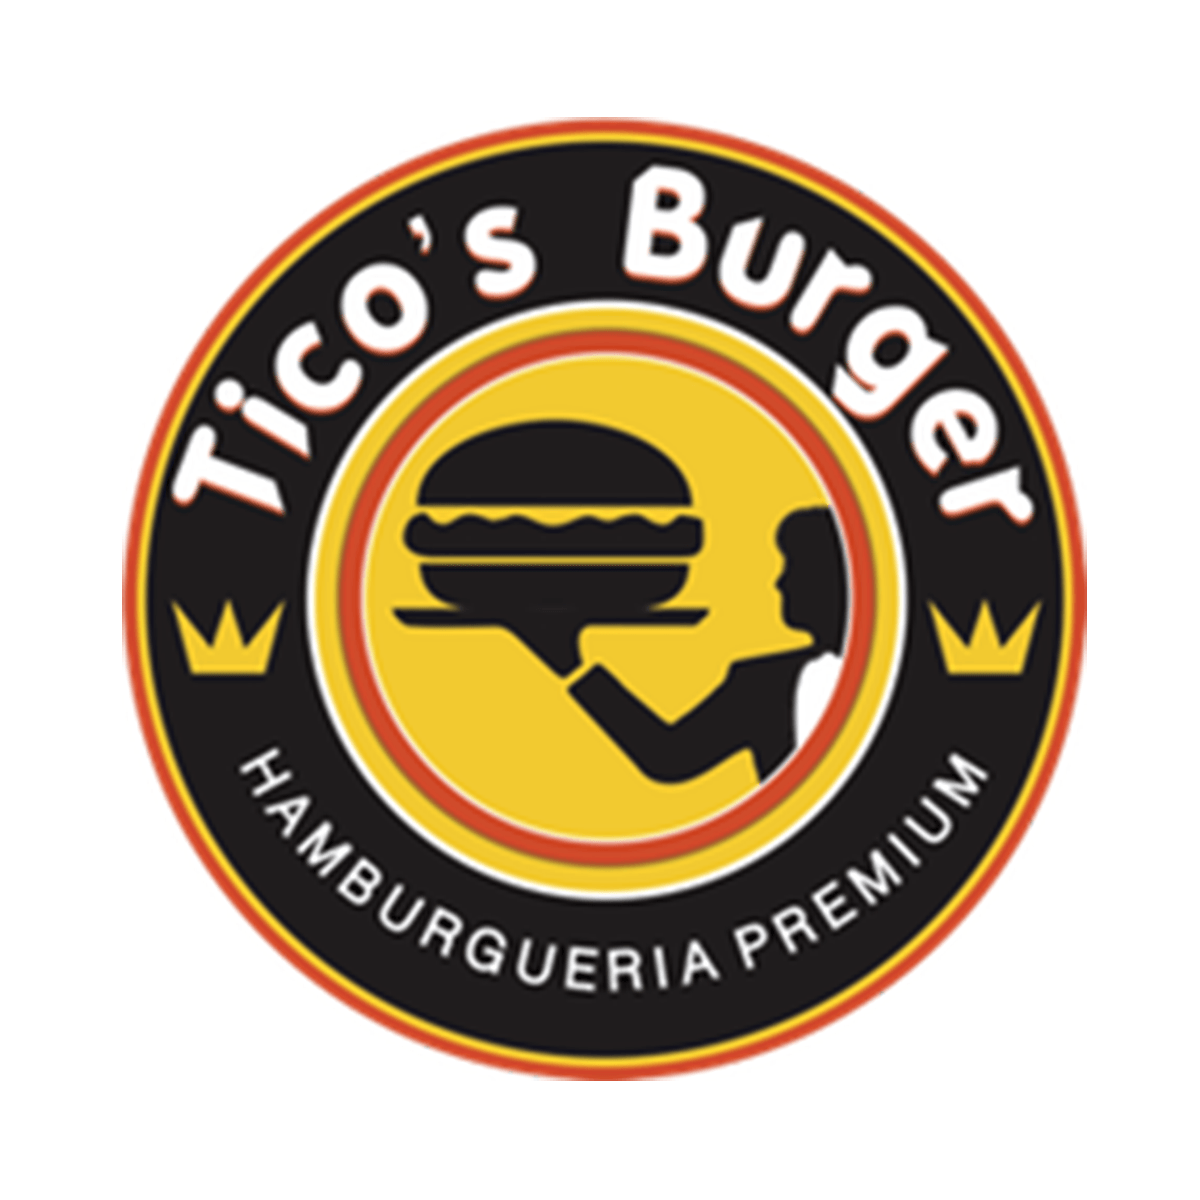 Tico's Burger